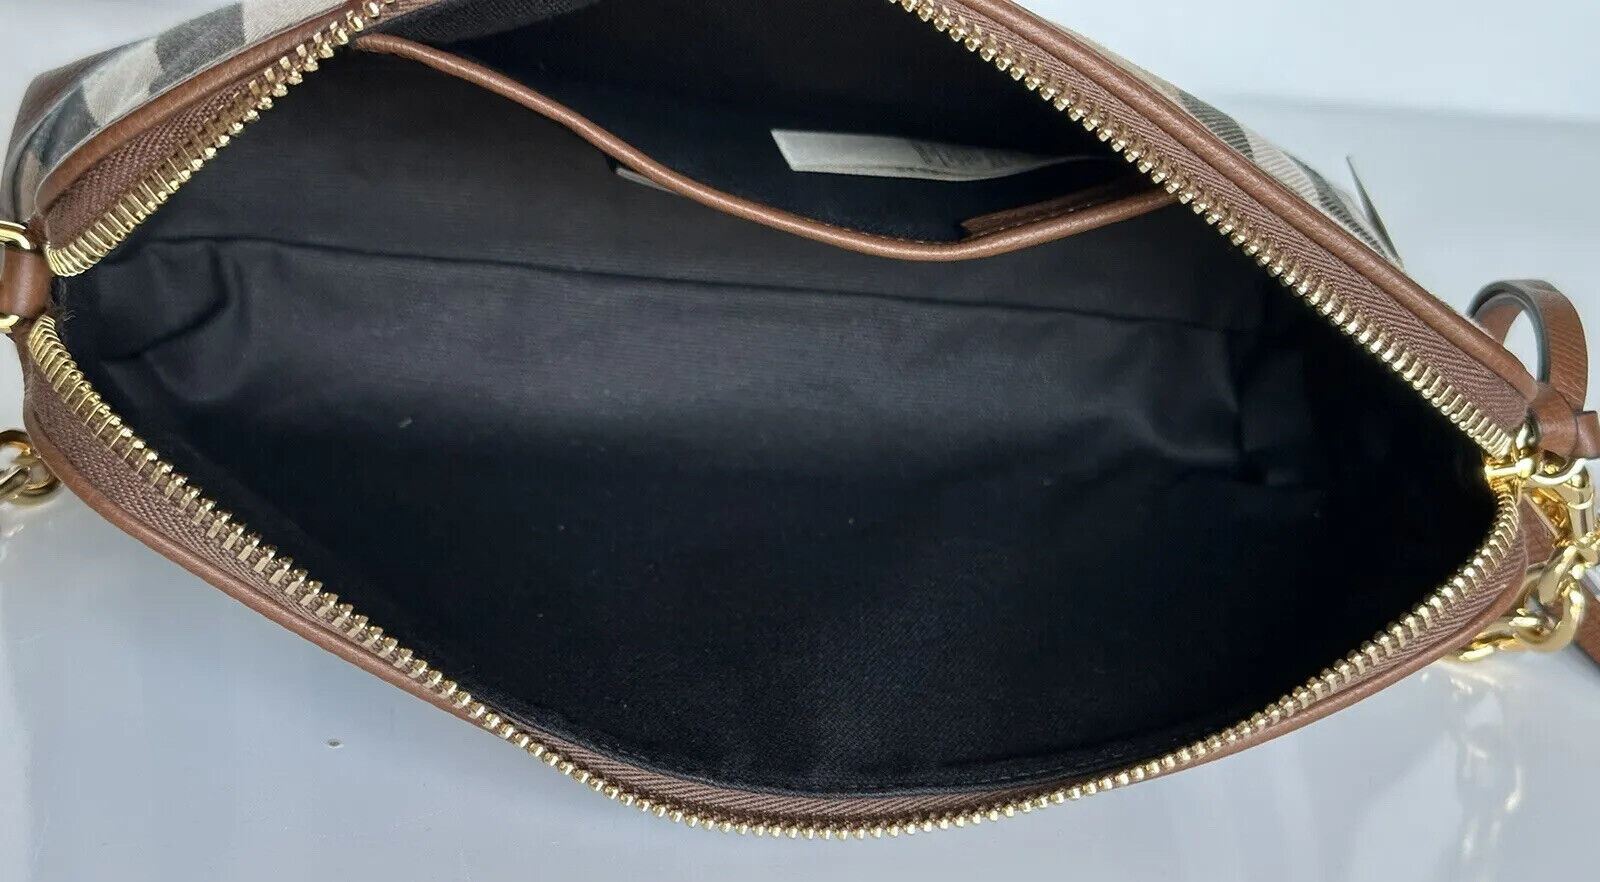 NWT Burberry Abingdon House Check Derby Кожаная сумка на плечо Желто-коричневый 40147391 Италия 